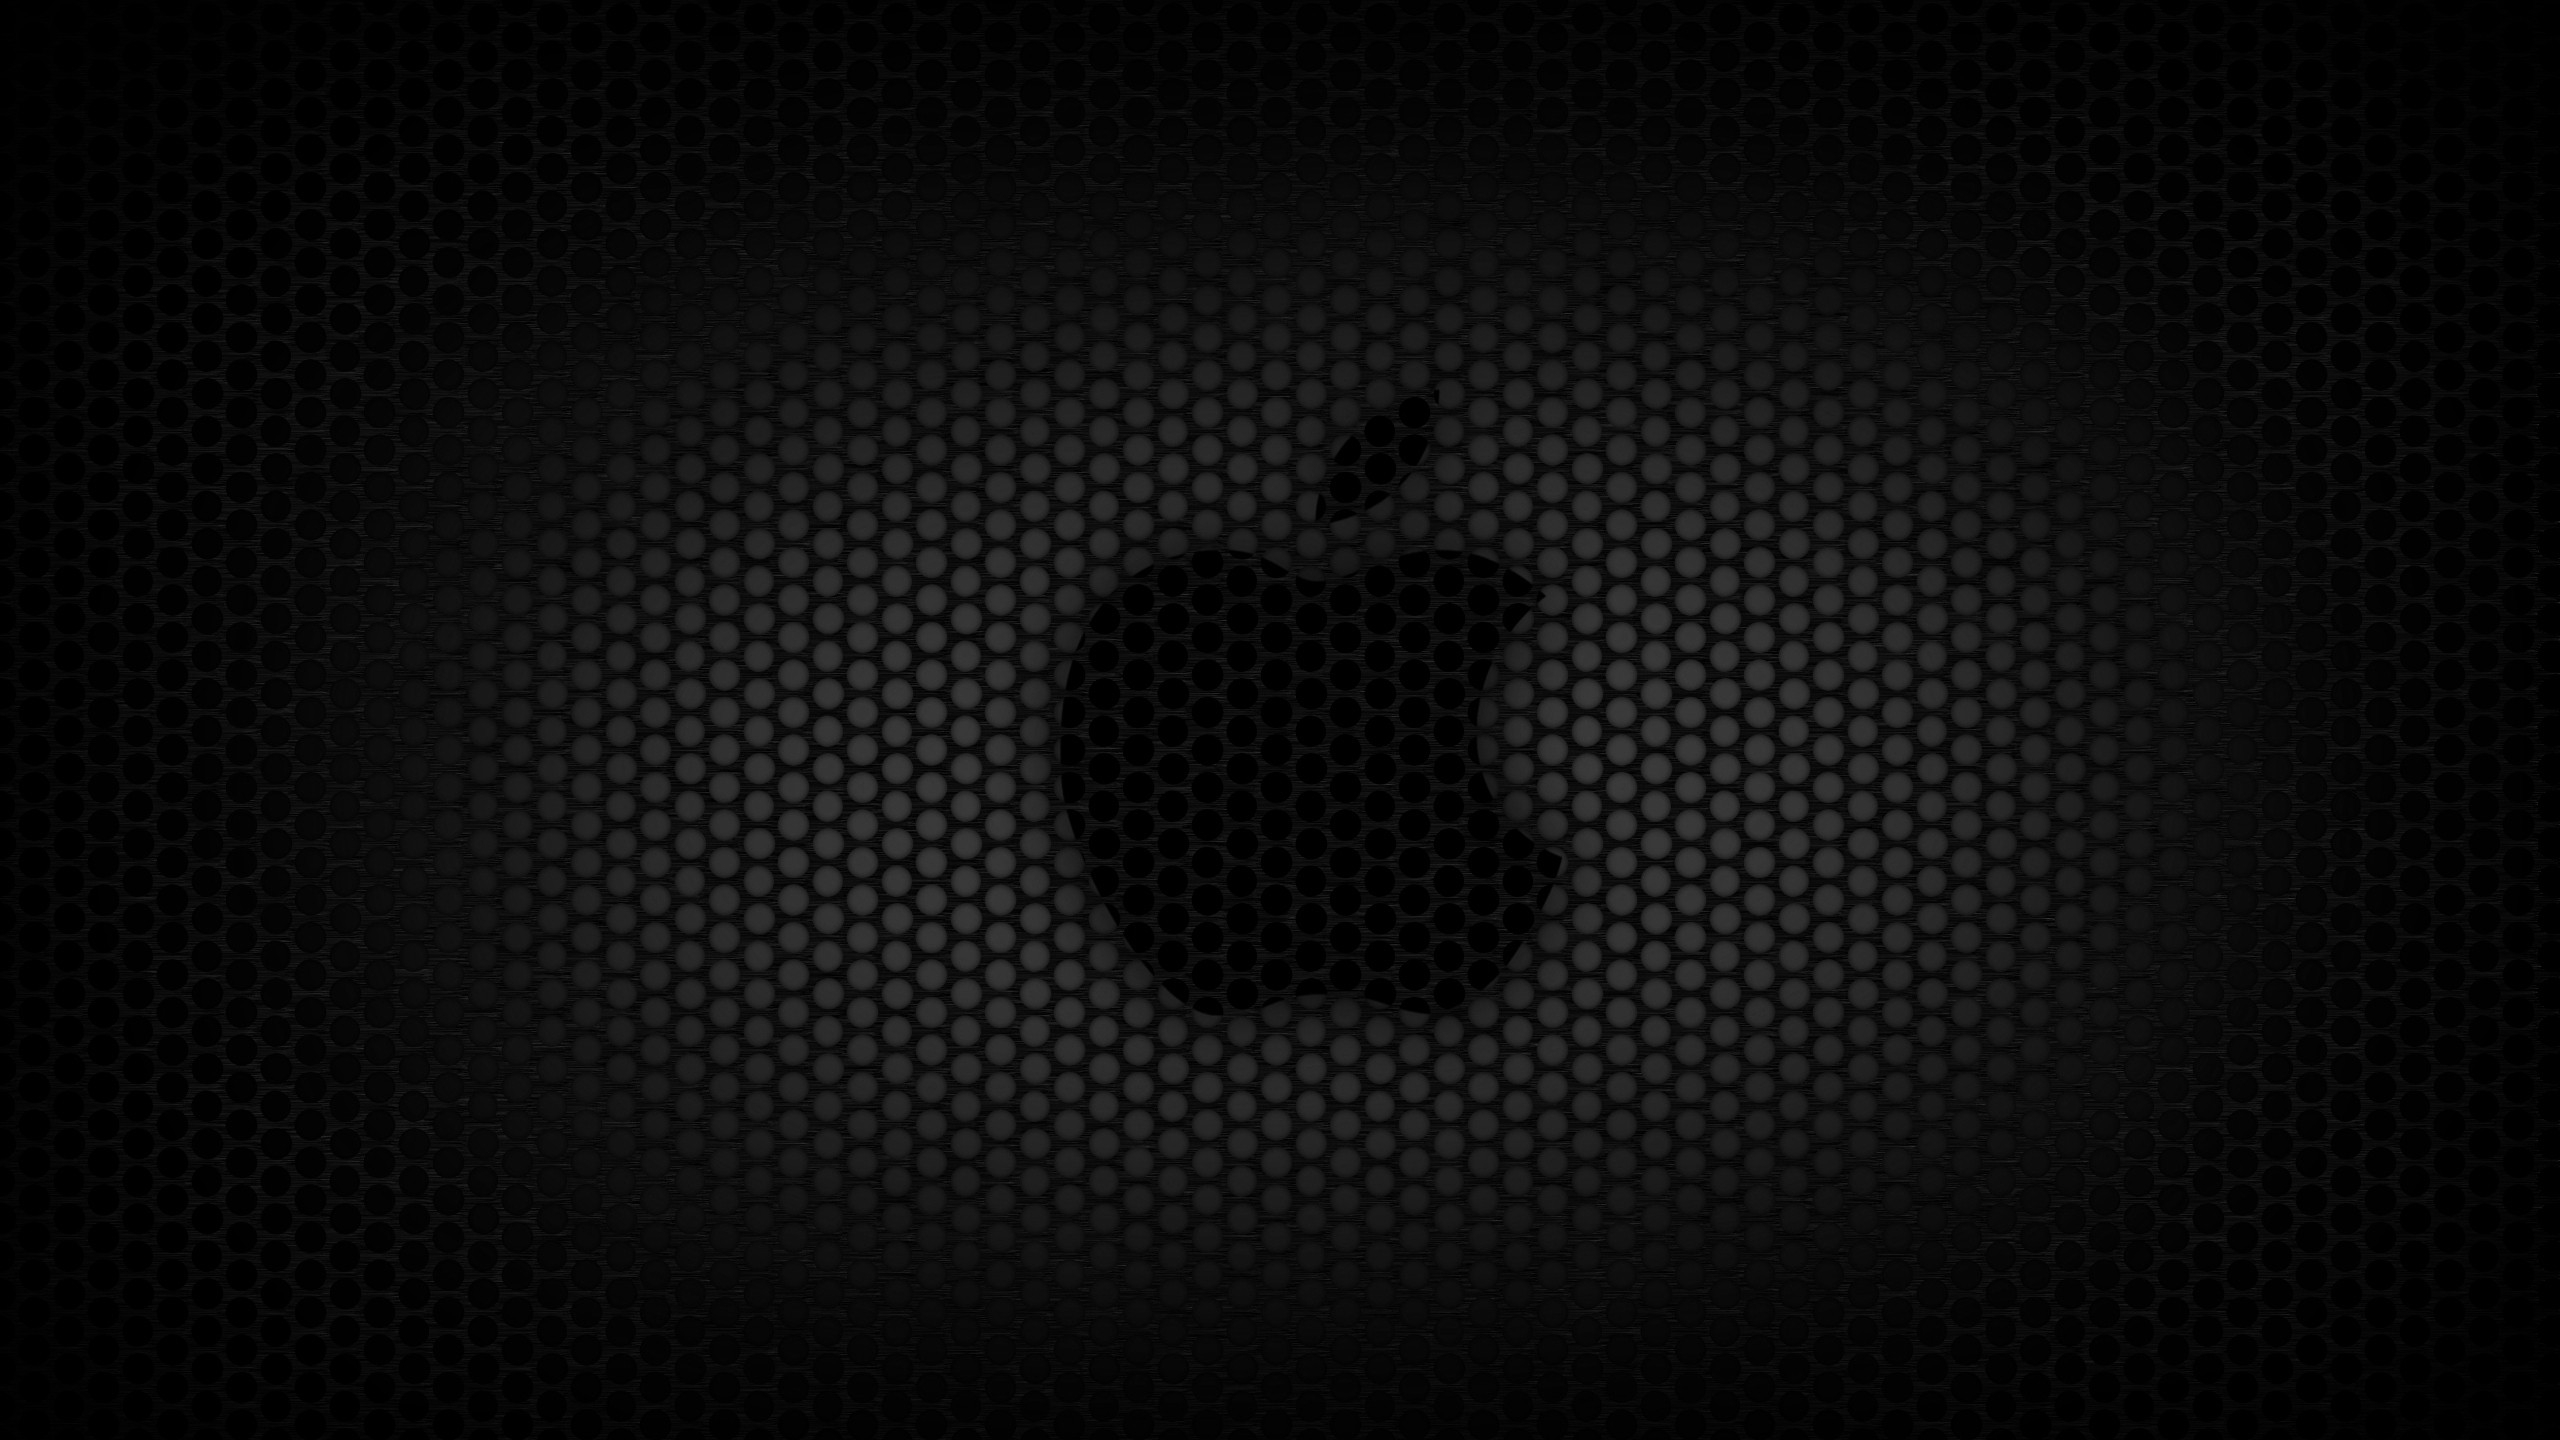 Free photo Mac logo on dark background